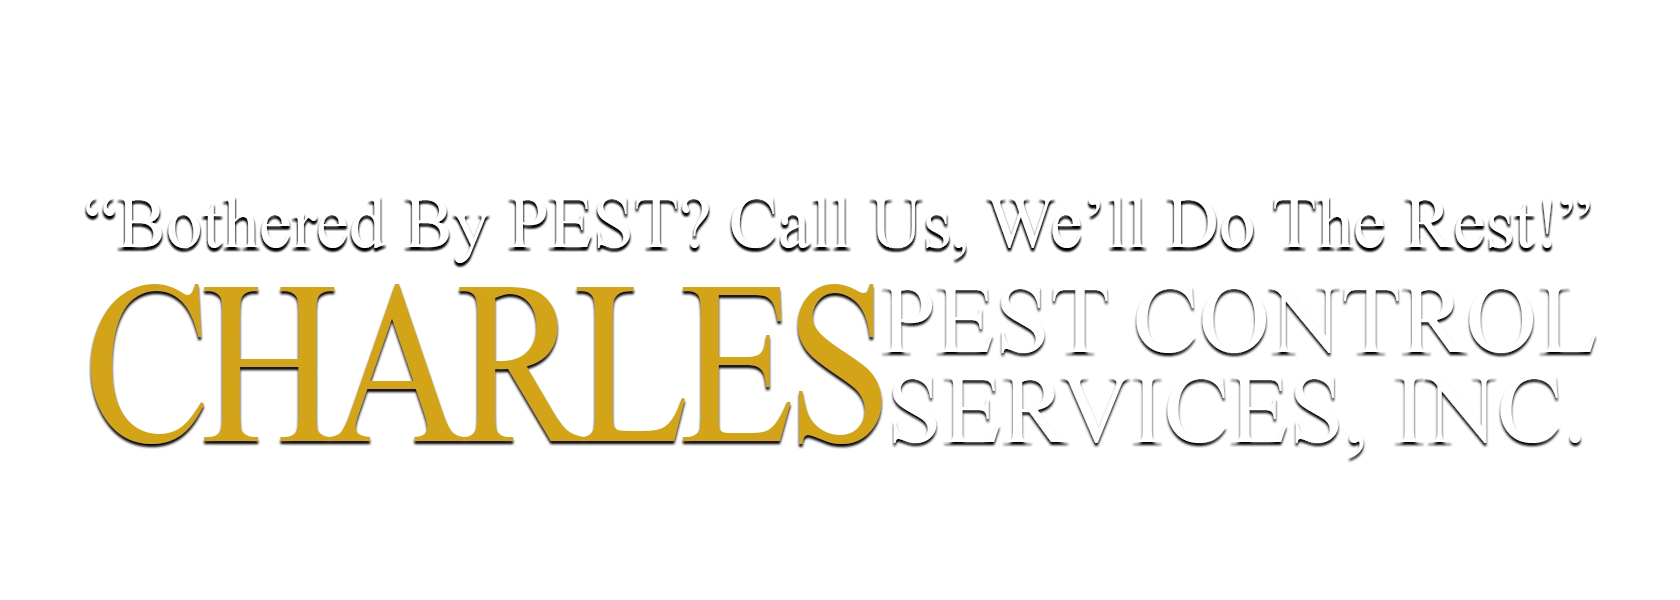 Charles Pest Control Services Inc. Logo